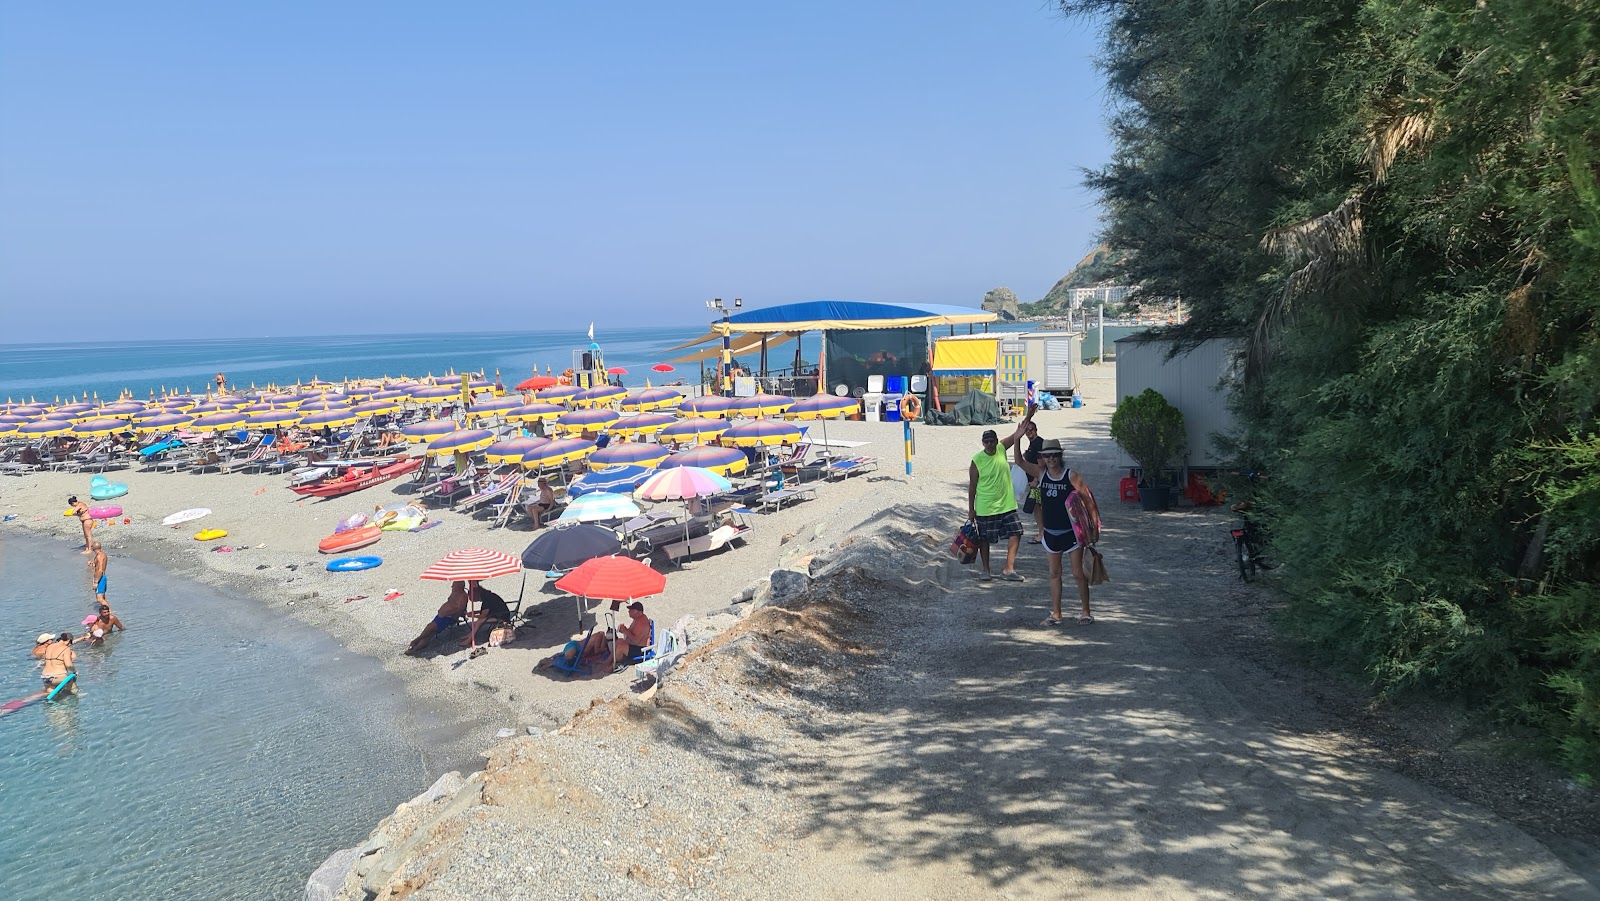 Foto de Spiaggia Coreca área de resort de praia